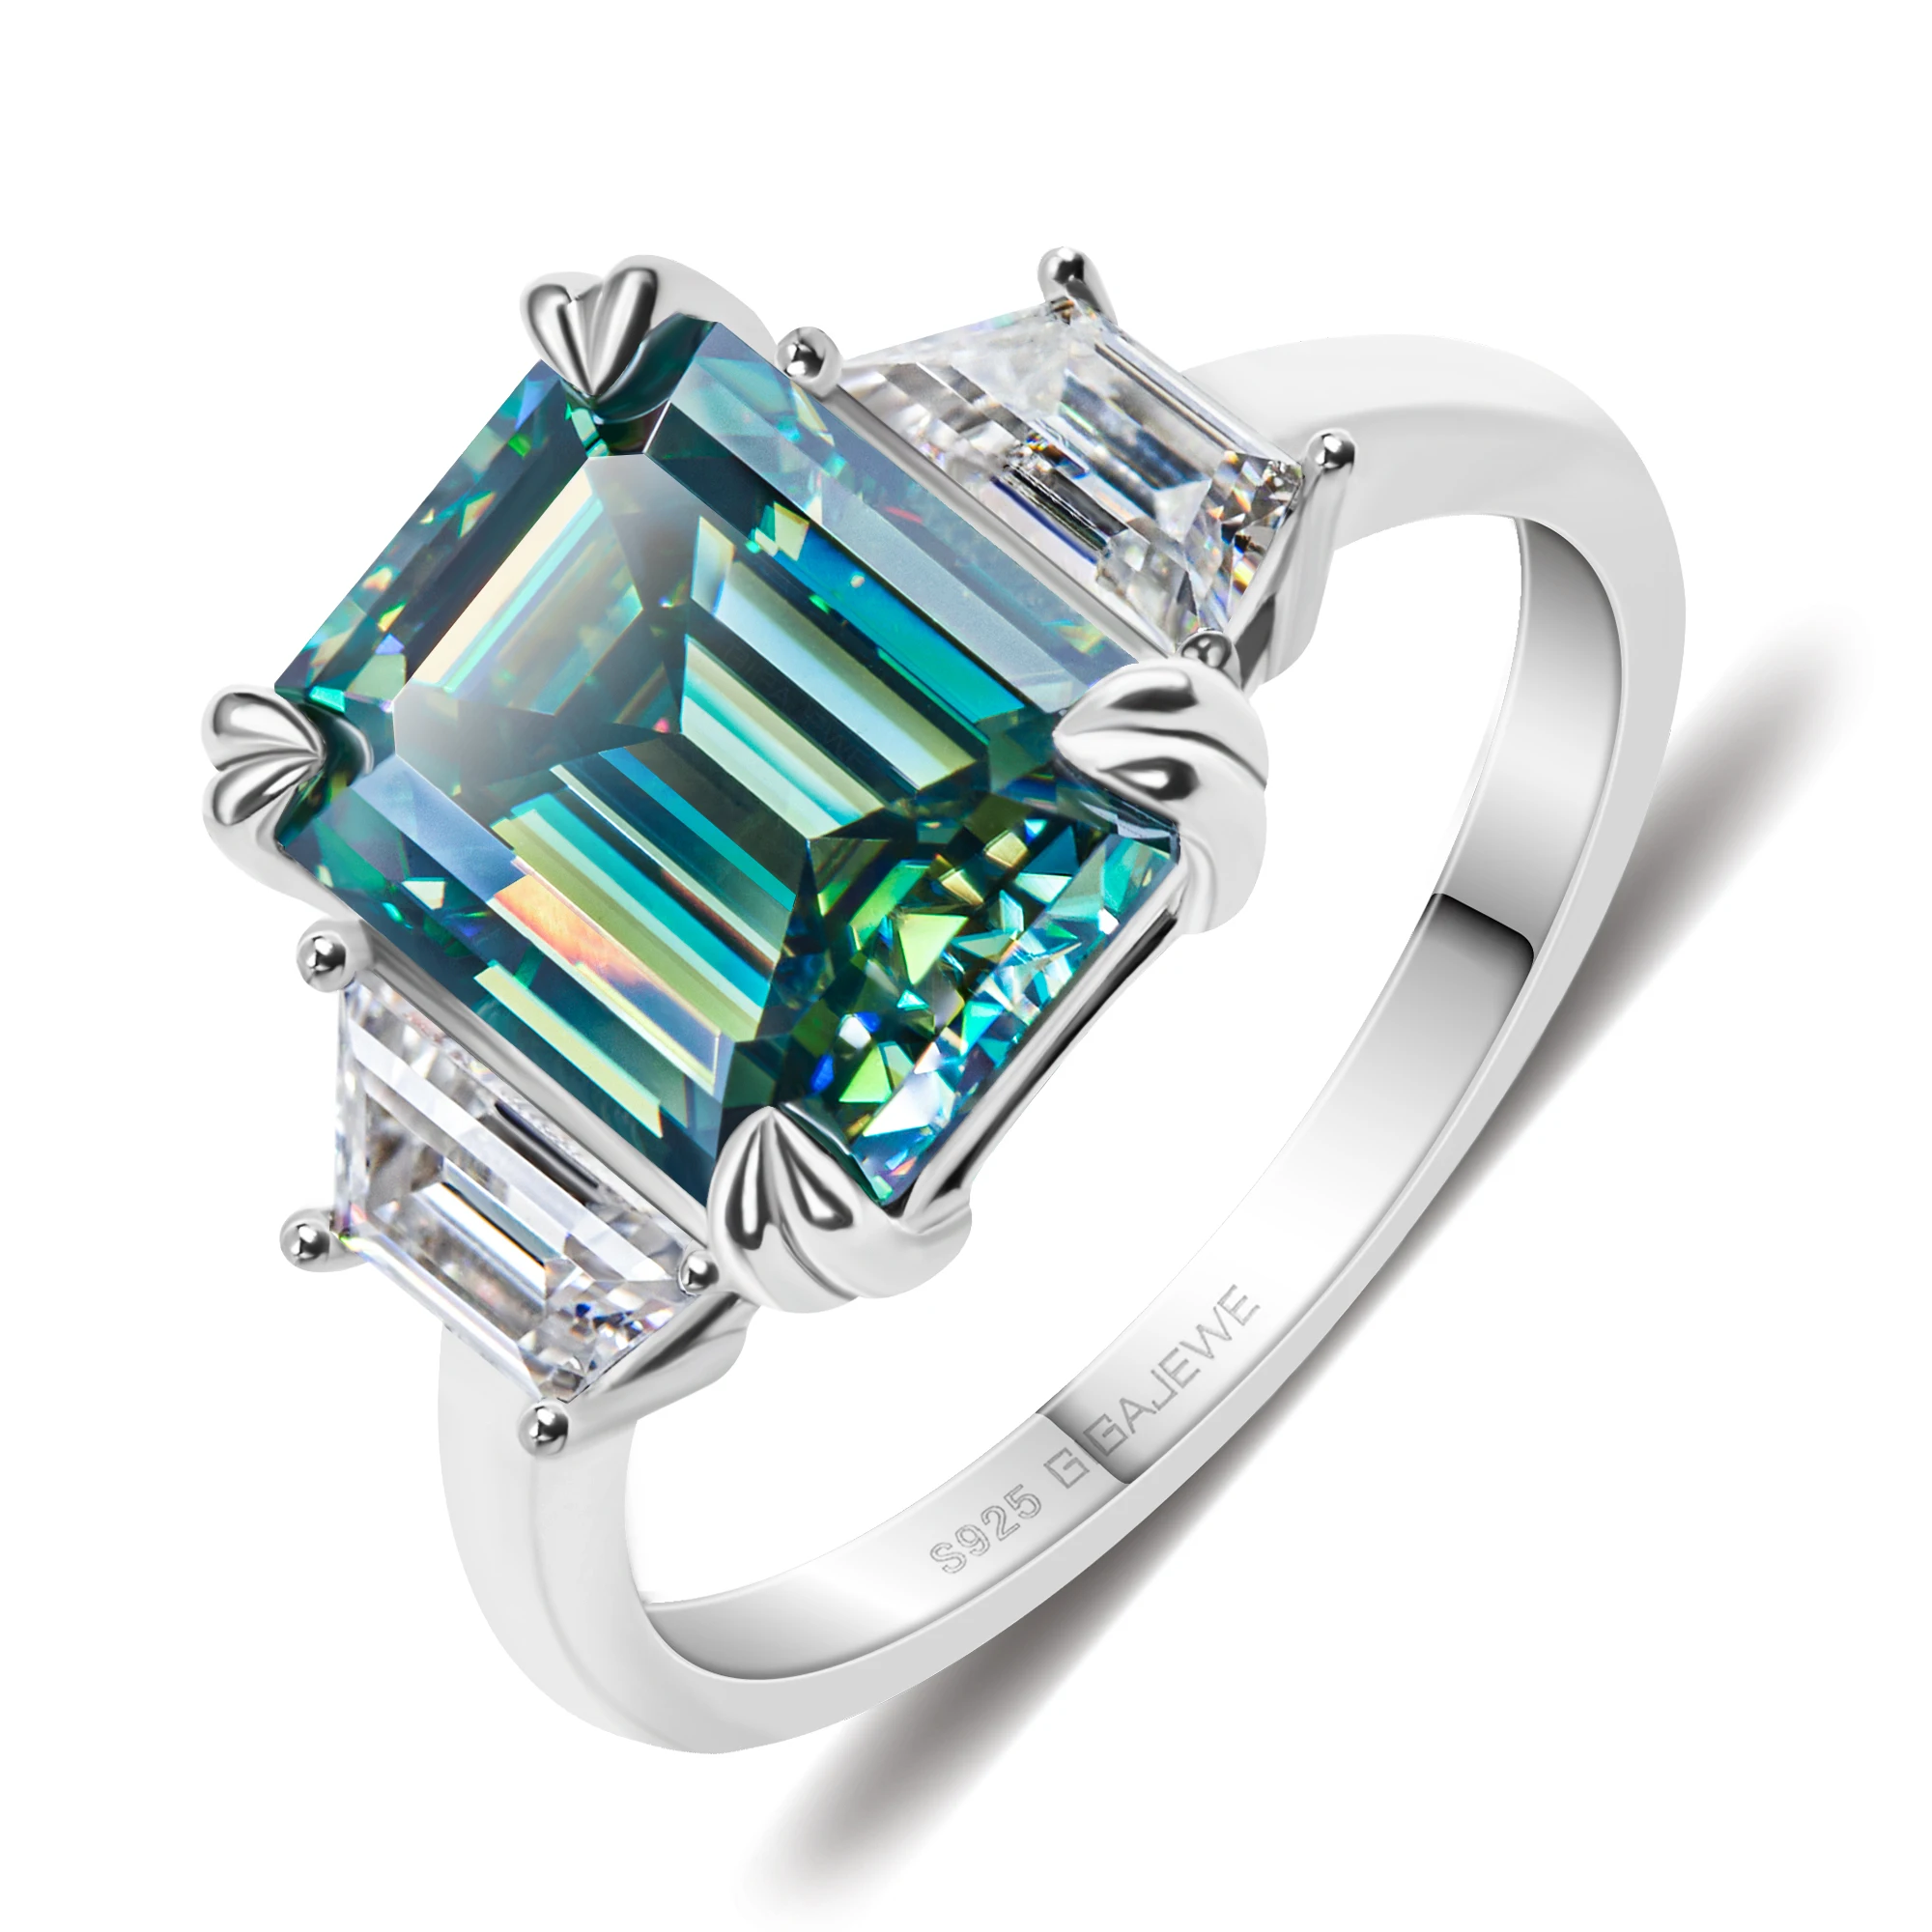 Moissanite Emerald Cut Natural Cyan 8X10mm 4.0ct S925 Silver Ring Diamond